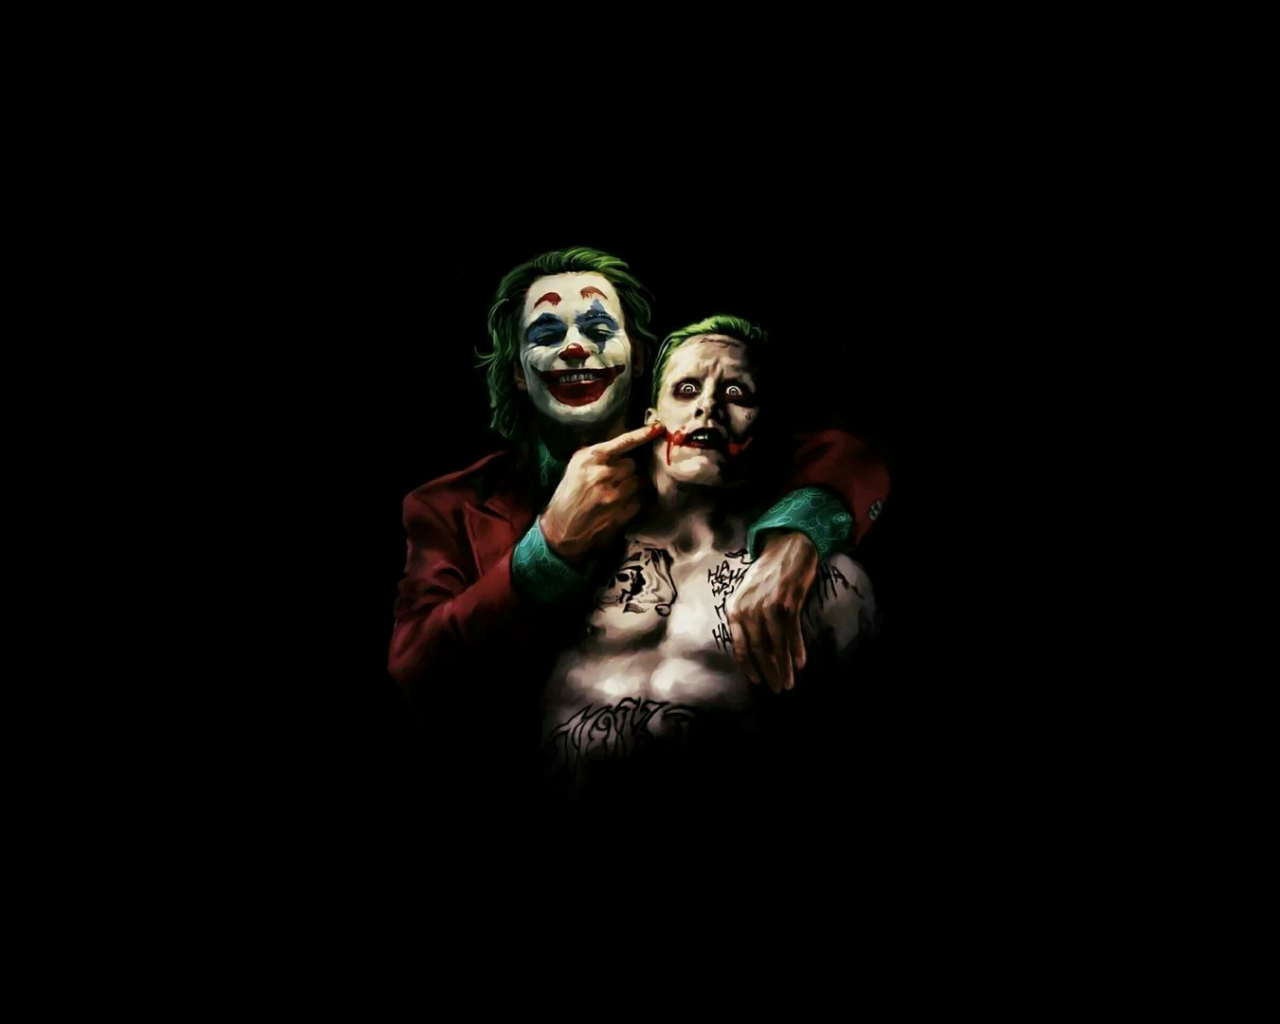 Joker Movie Poster Wallpapers